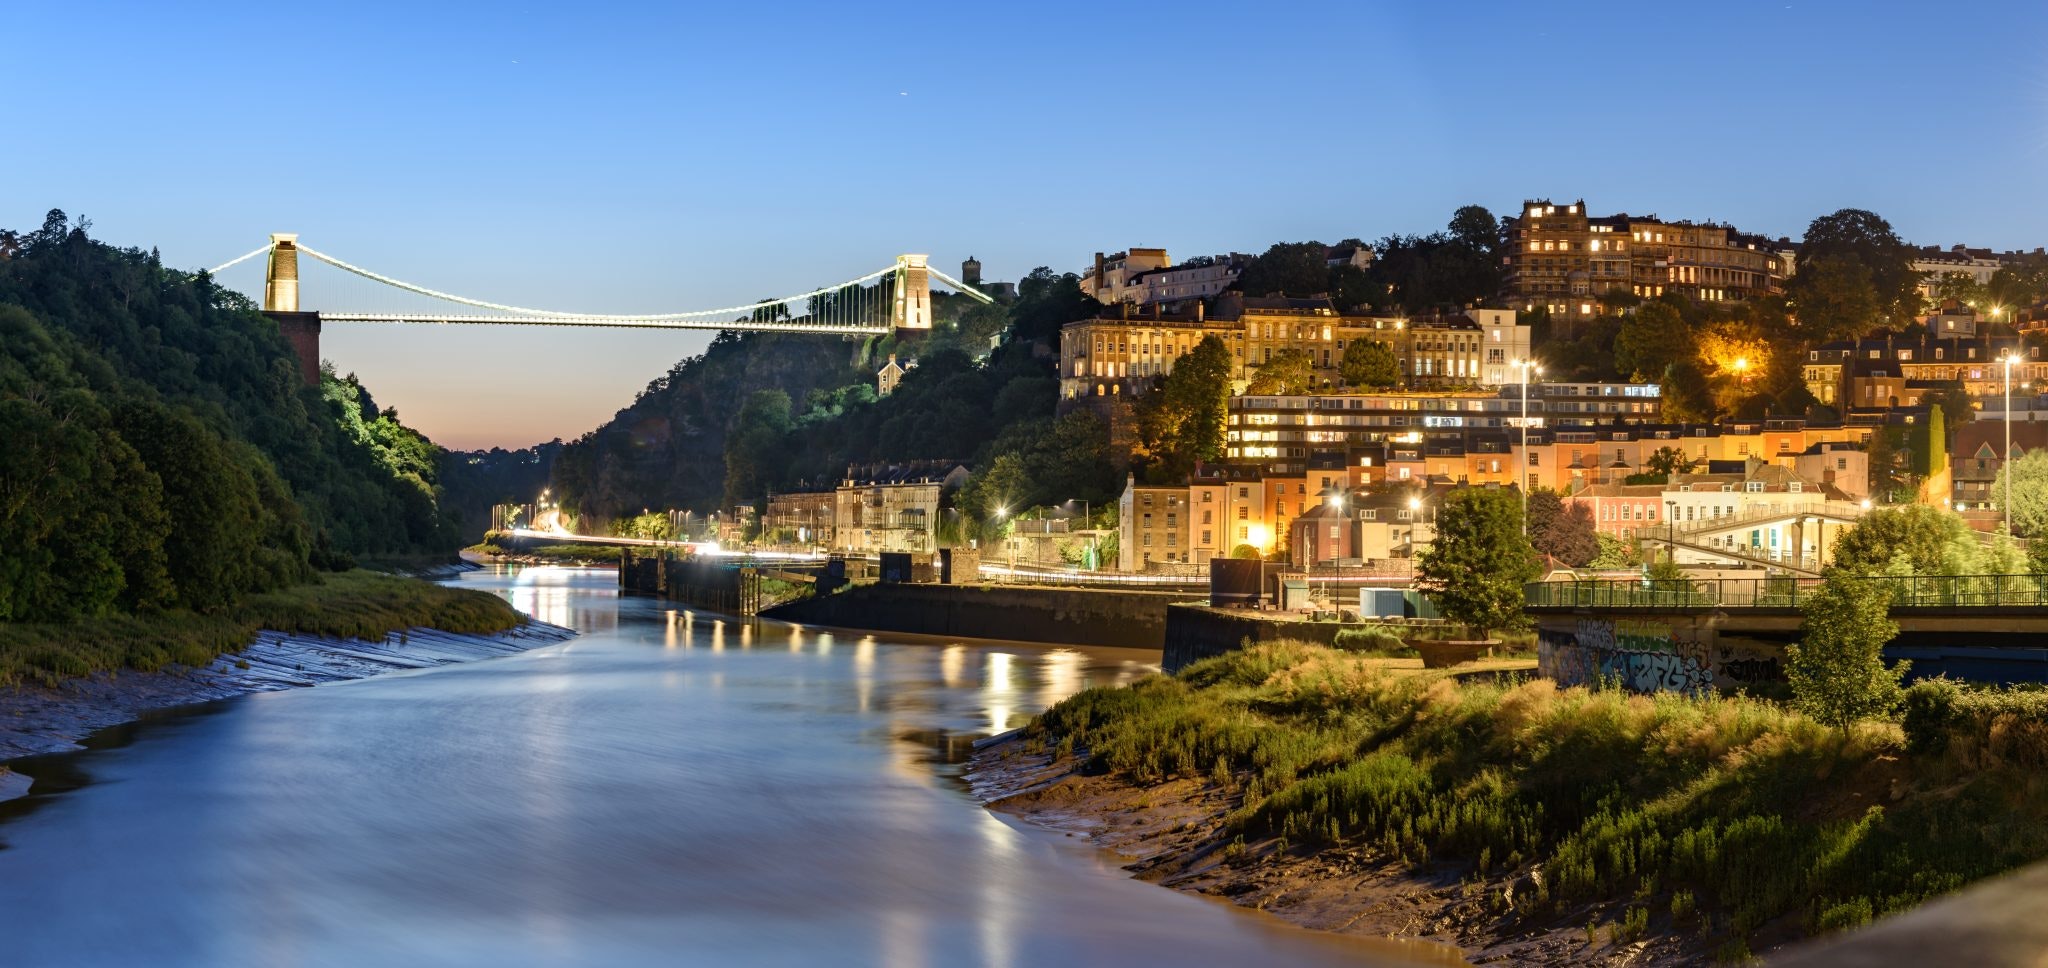 Clifton bridge panning across river Avon in Bristol, UK.